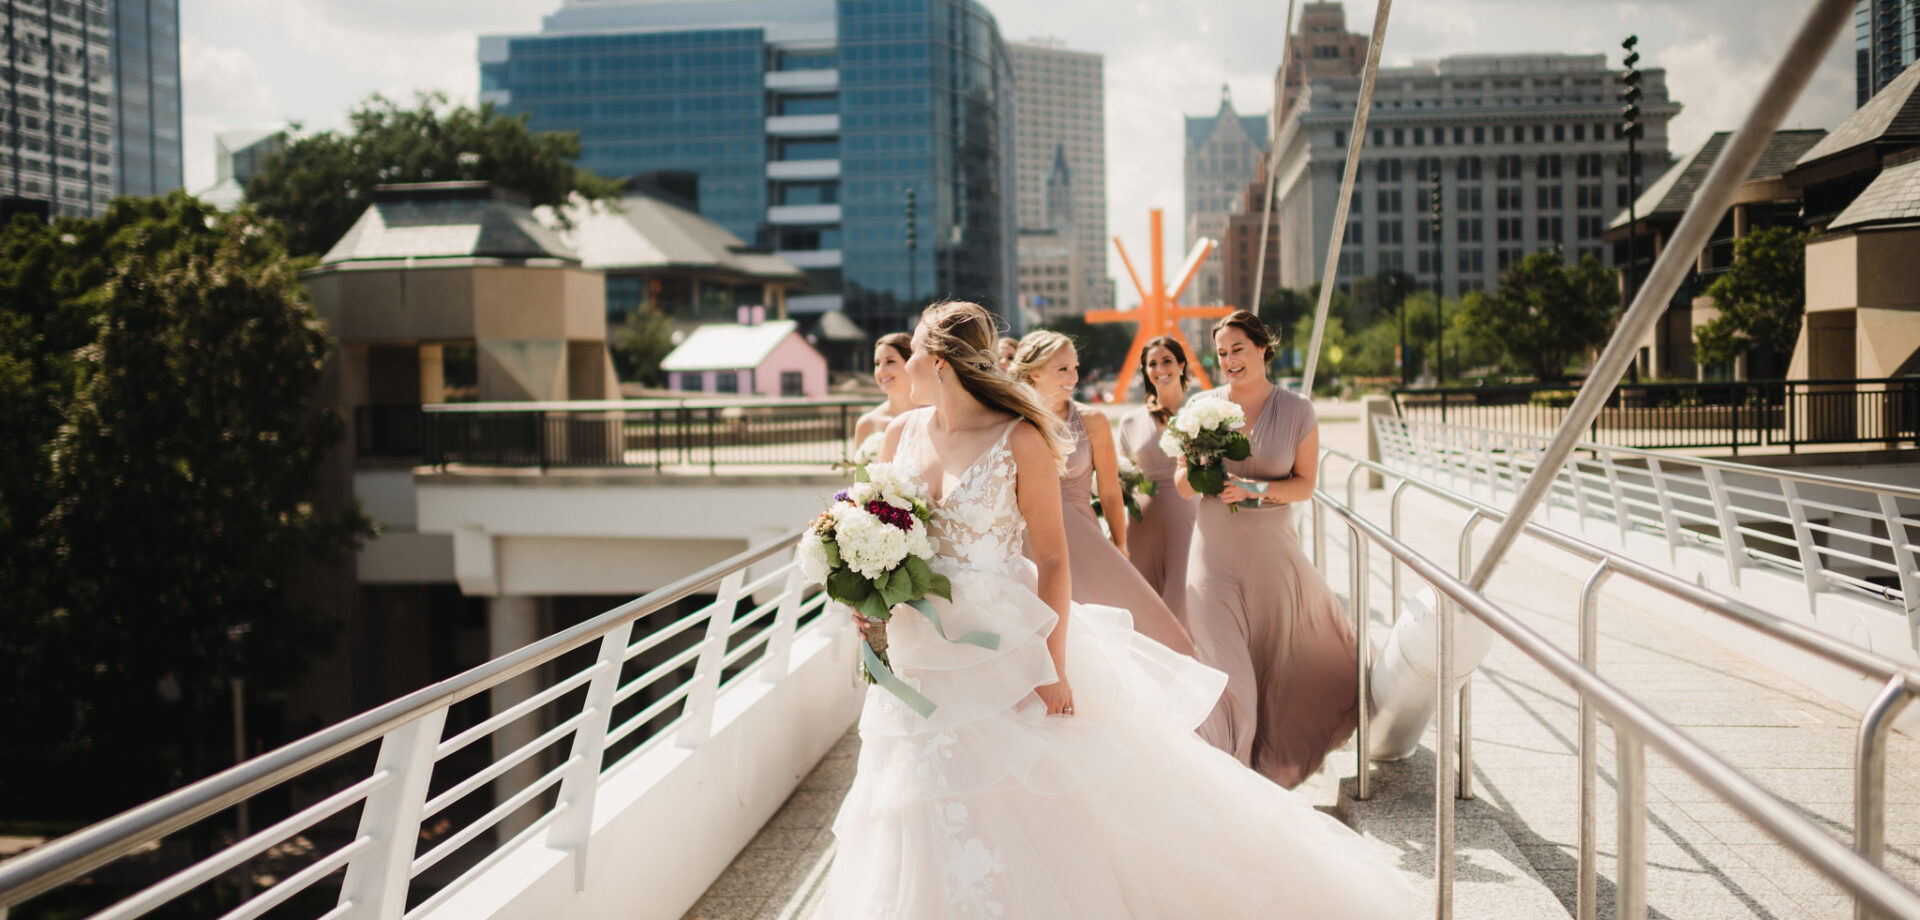 Bridal party walking lakeside on dock